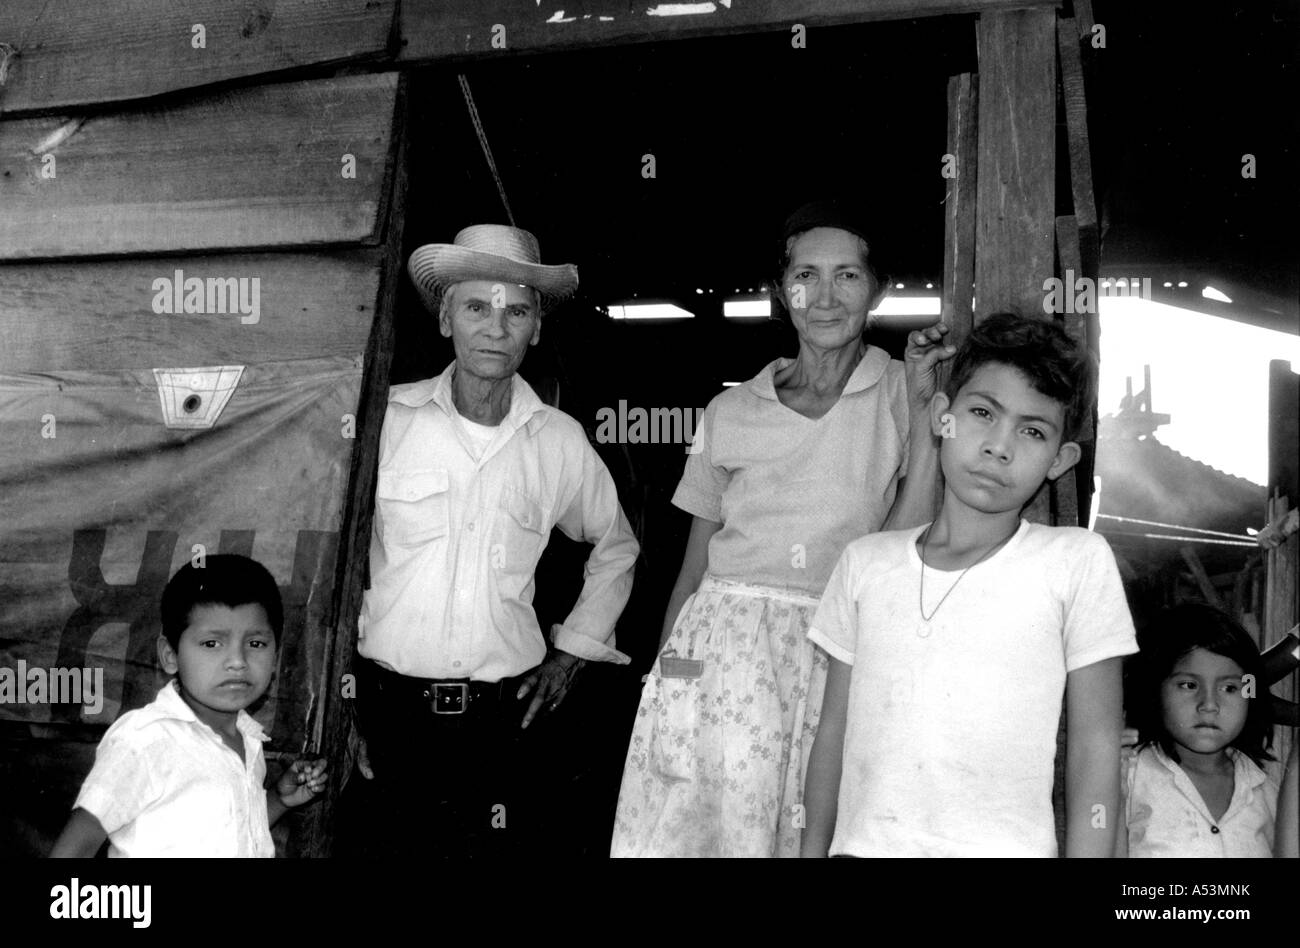 Painet ha1438 black and white family refugees colomocagua refugee camp honduras bw black-white municipality honduran Stock Photo